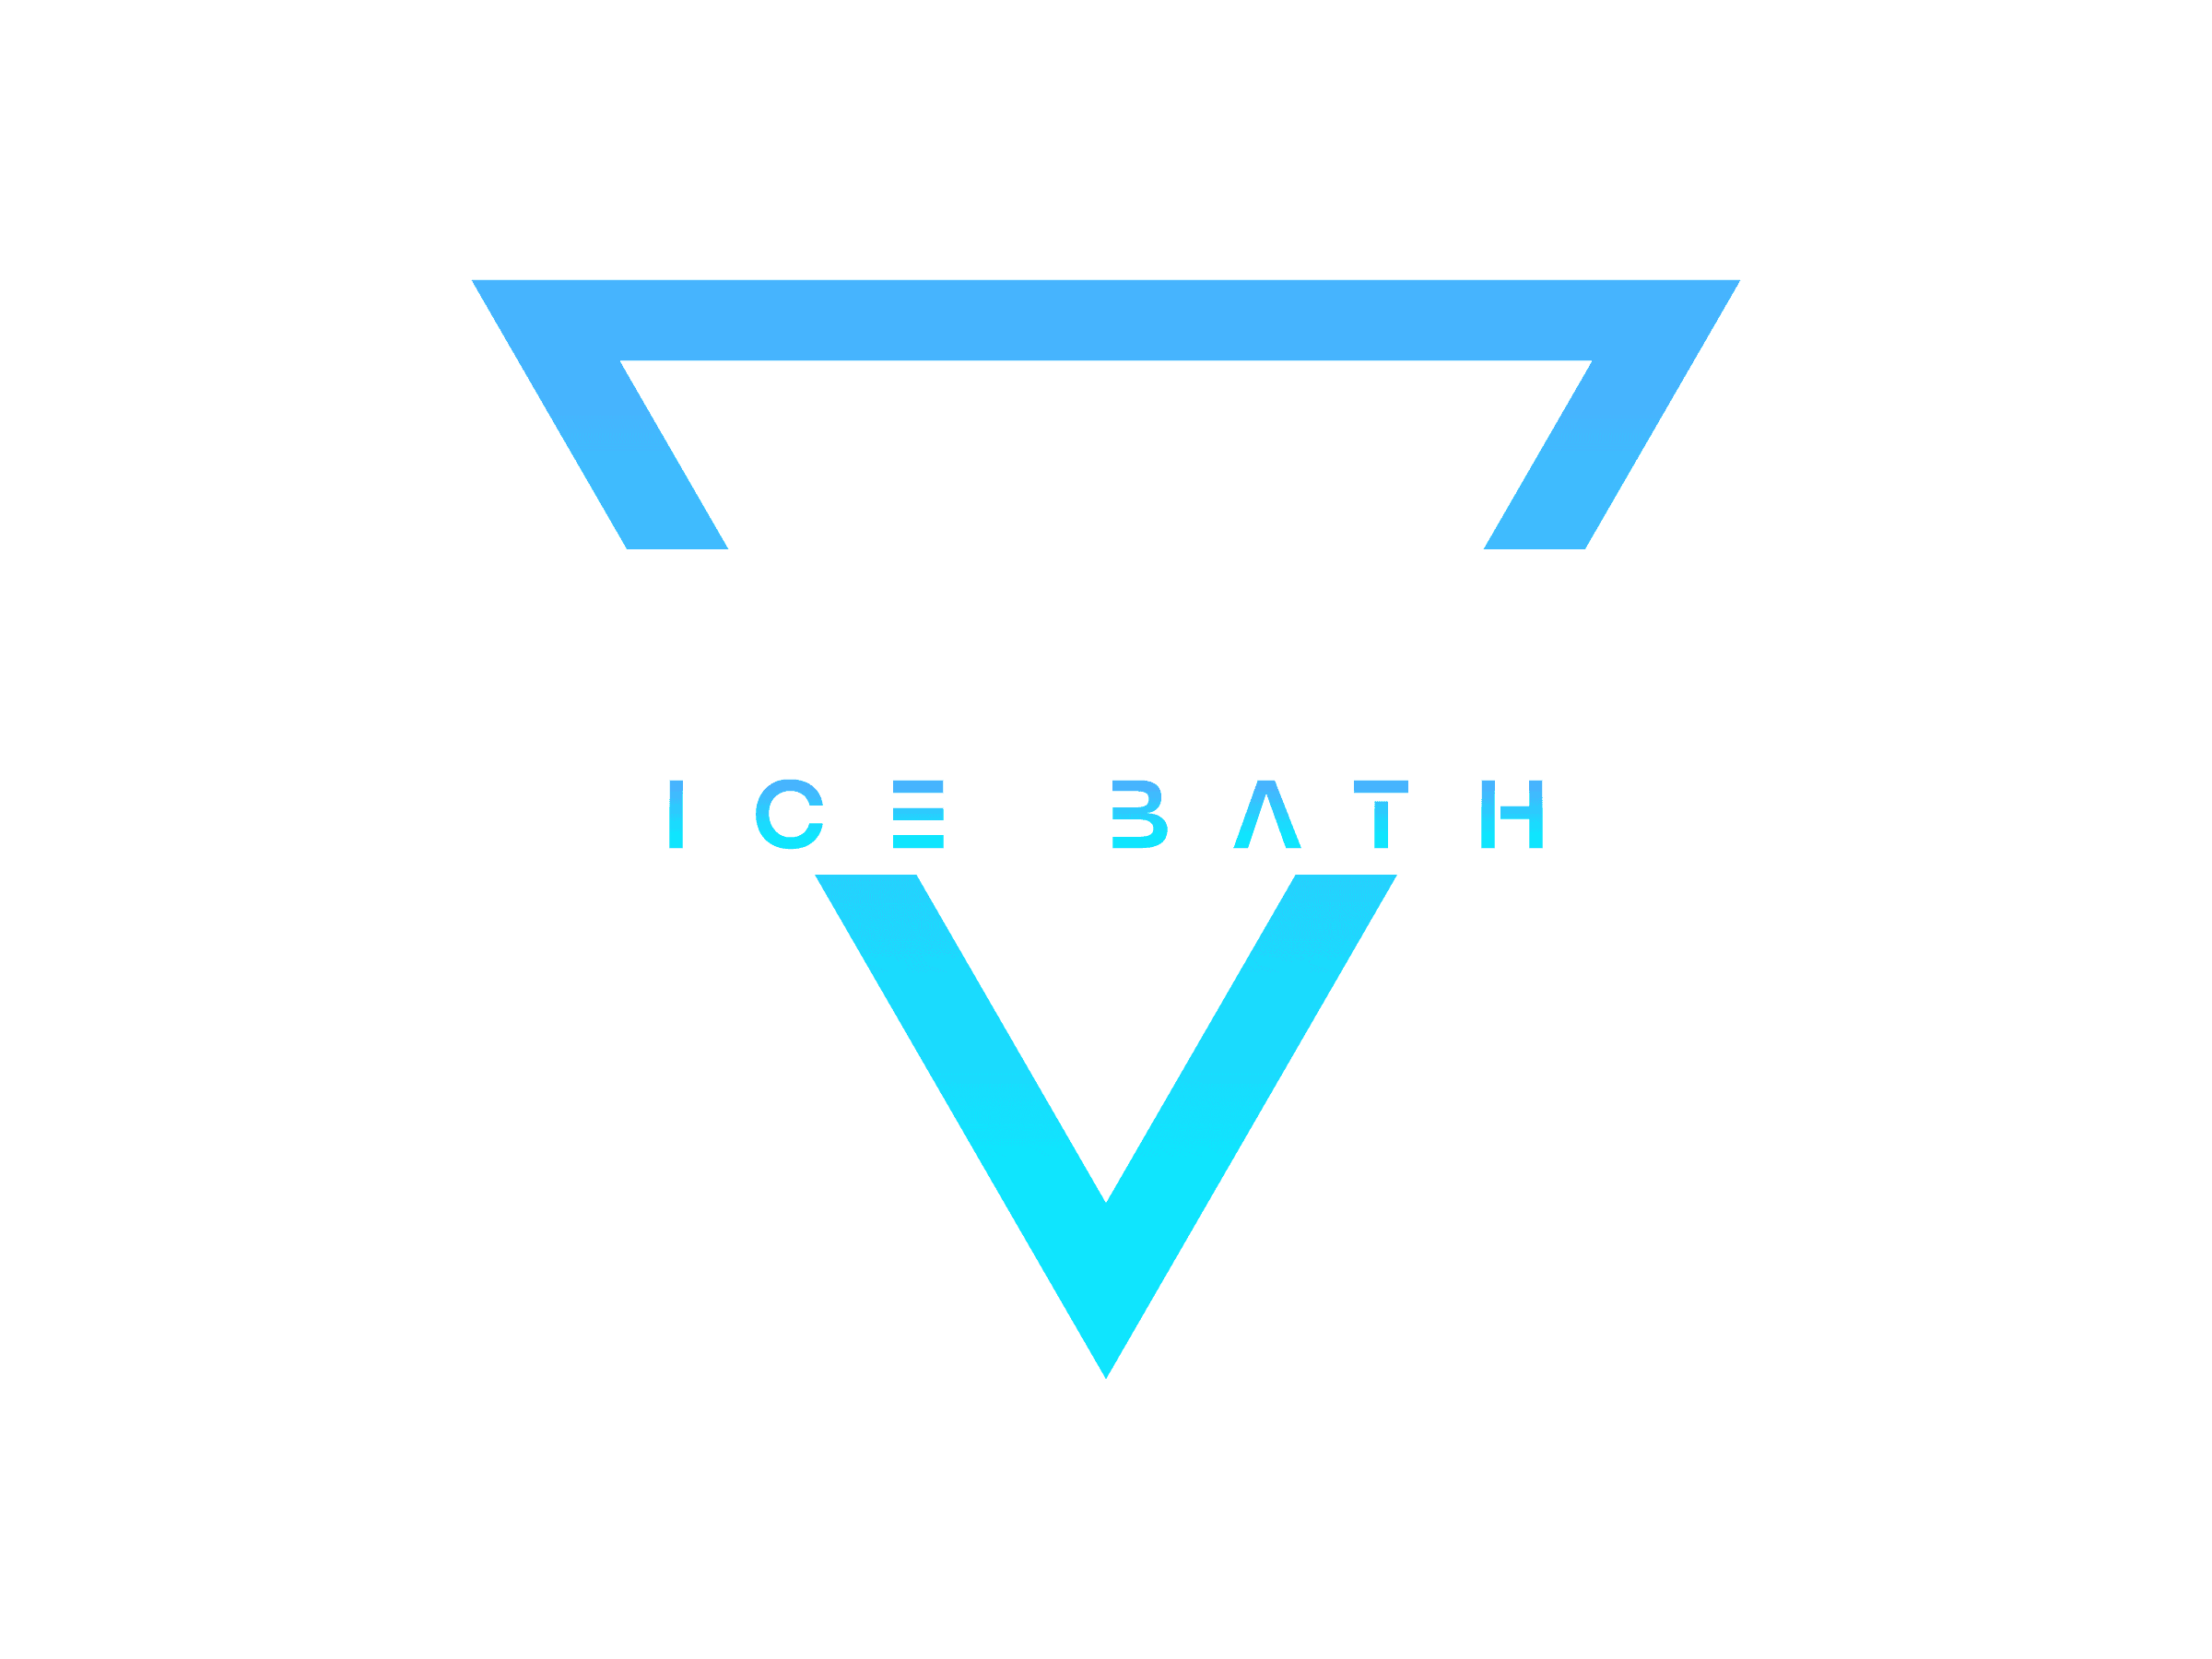 Arctic Ice Bath